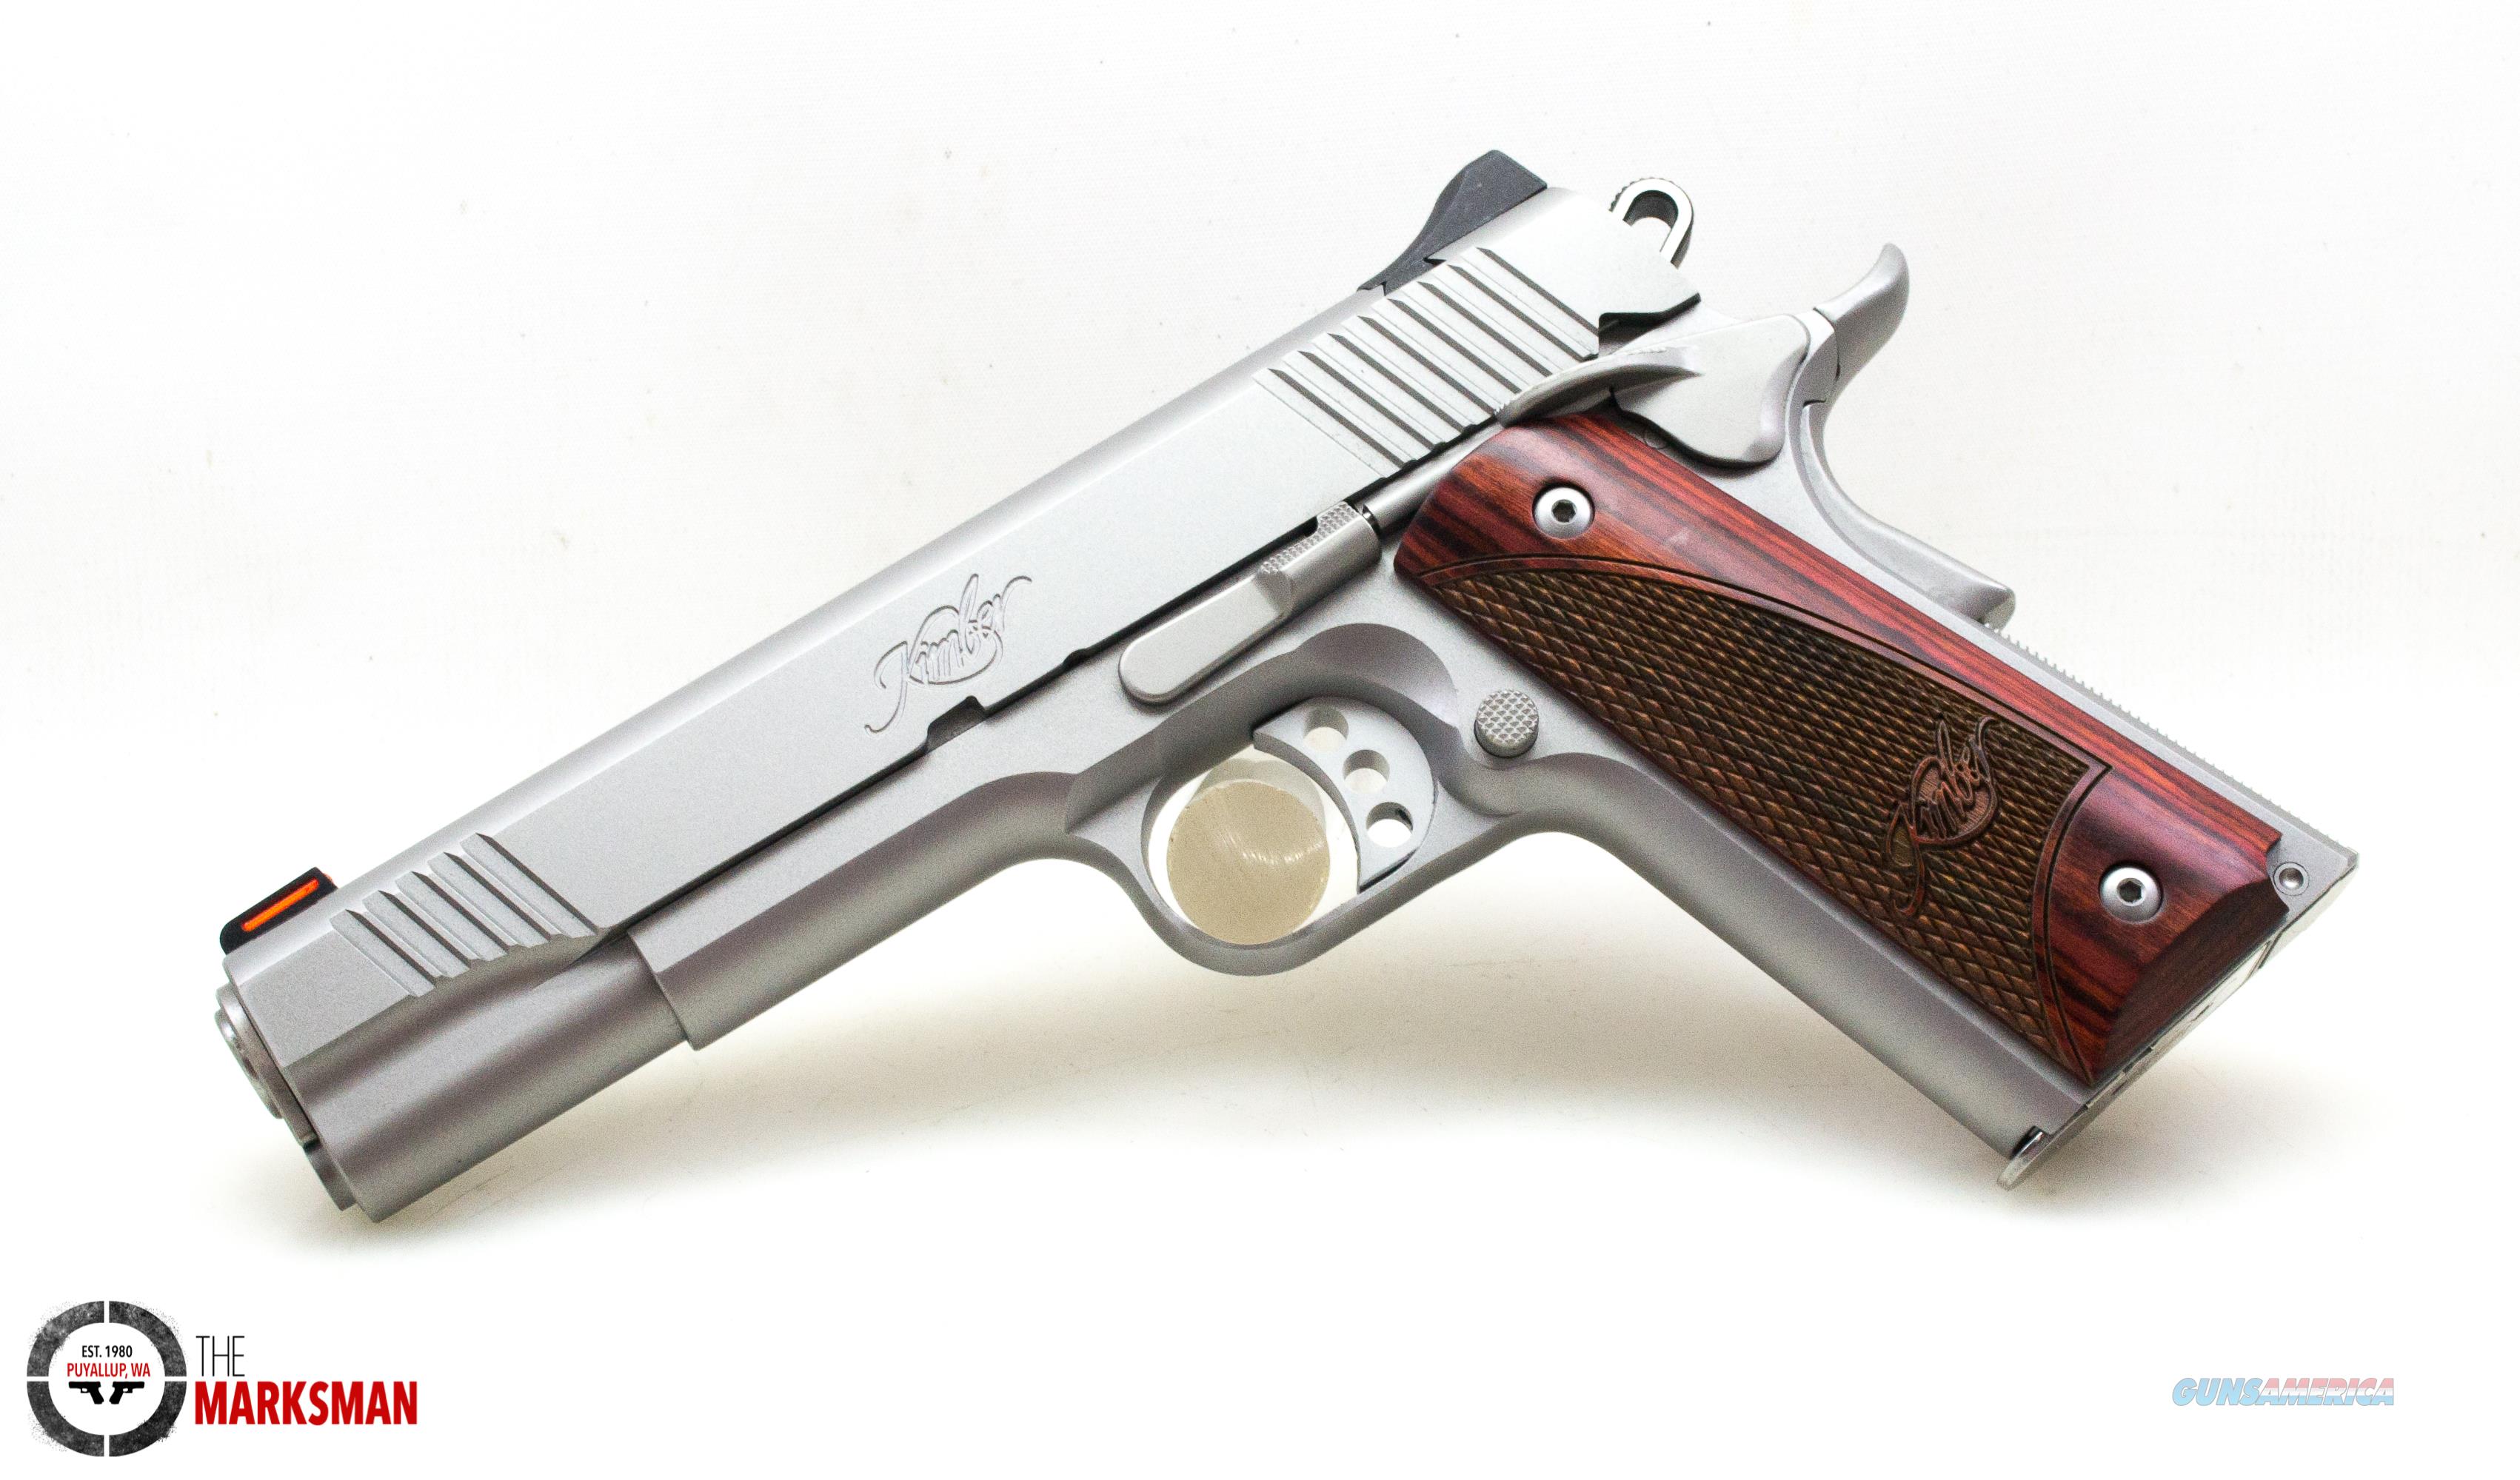 kimber 9mm pistols